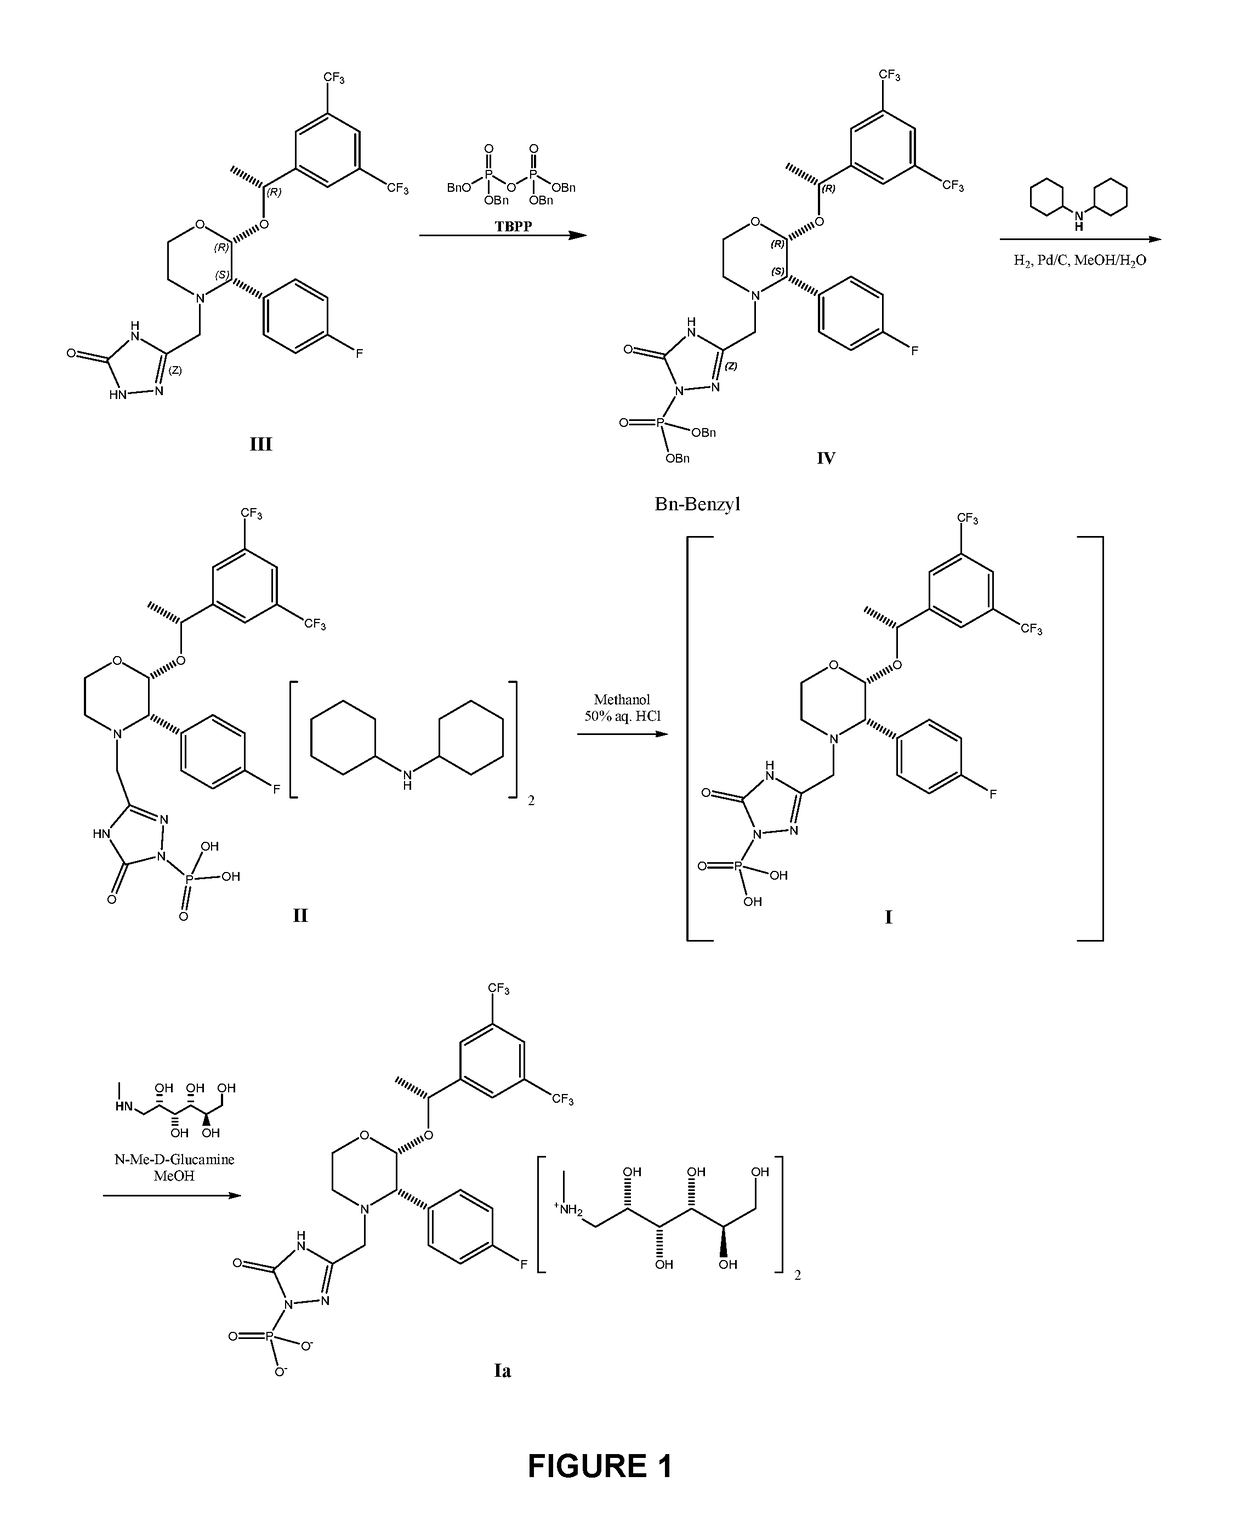 Crystalline fosaprepitant dicyclohexylamine salt and its preparation